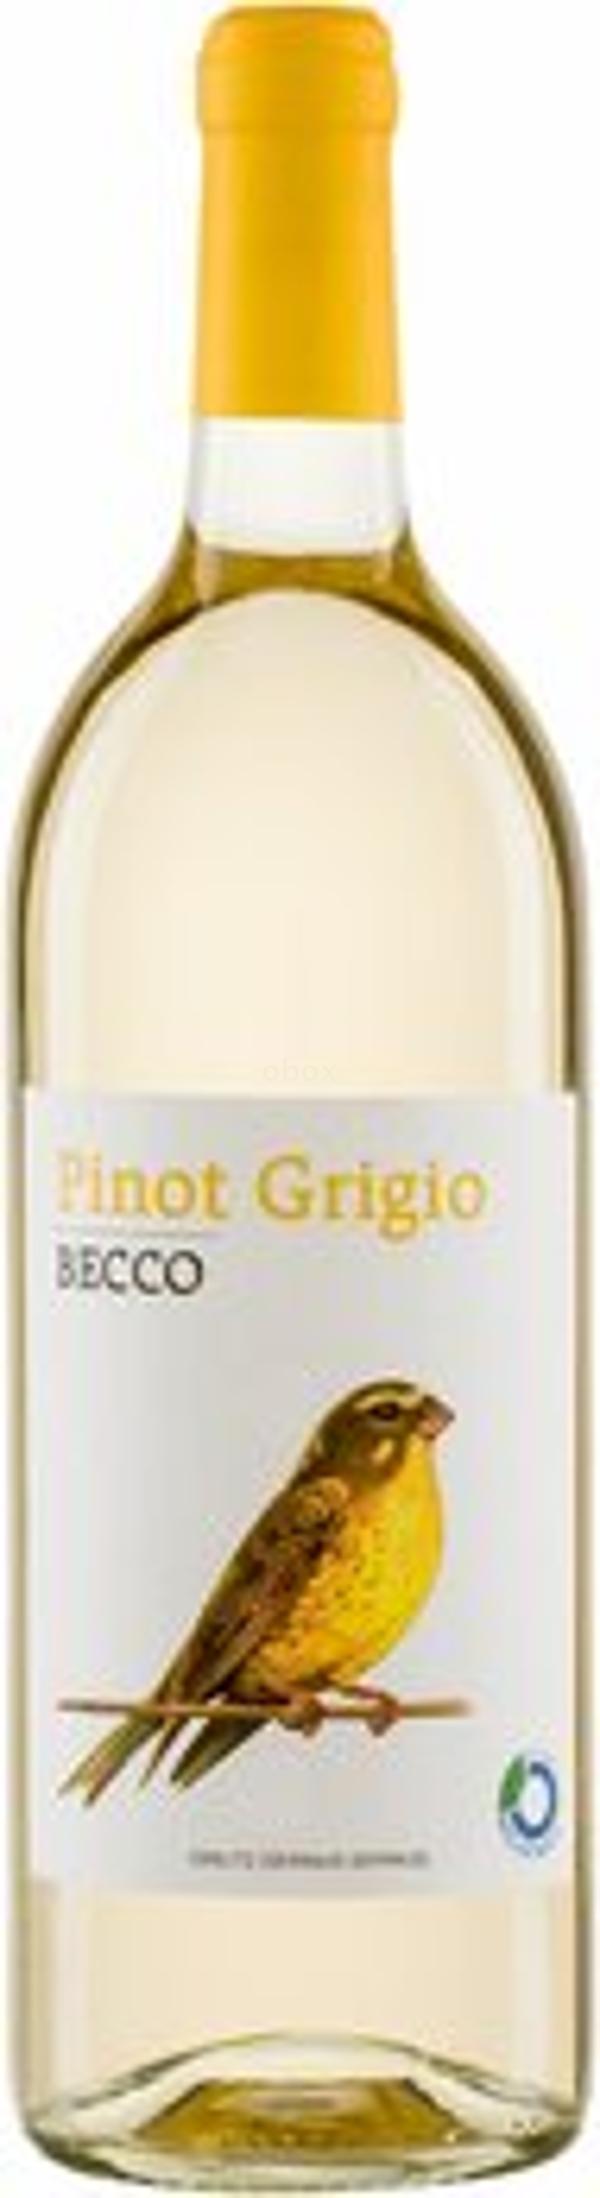 Produktfoto zu Becco Pinot Grigio